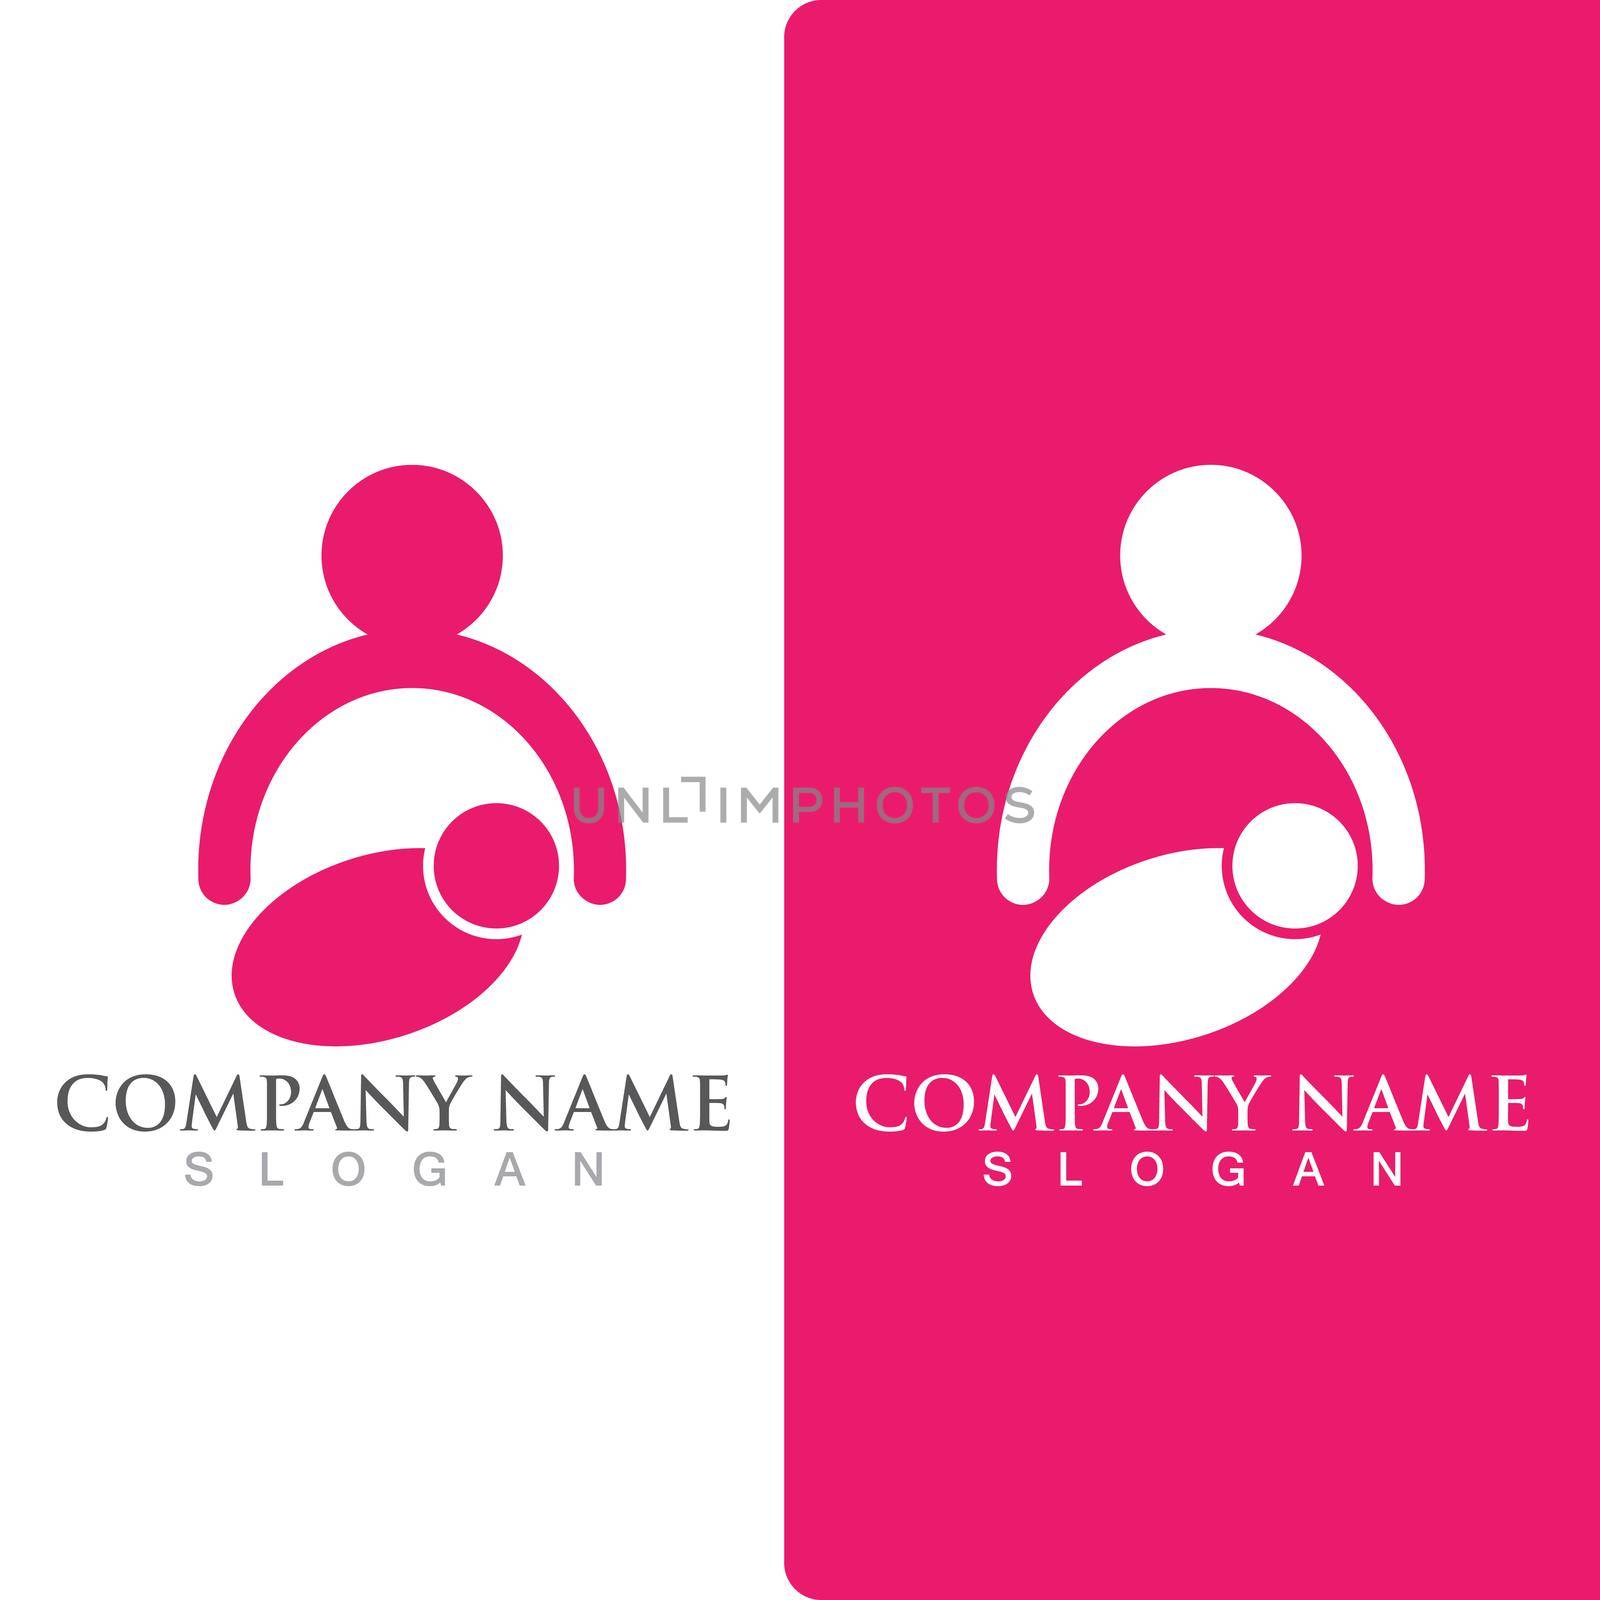 Adoption logo and symbol social icon design by Mrsongrphc